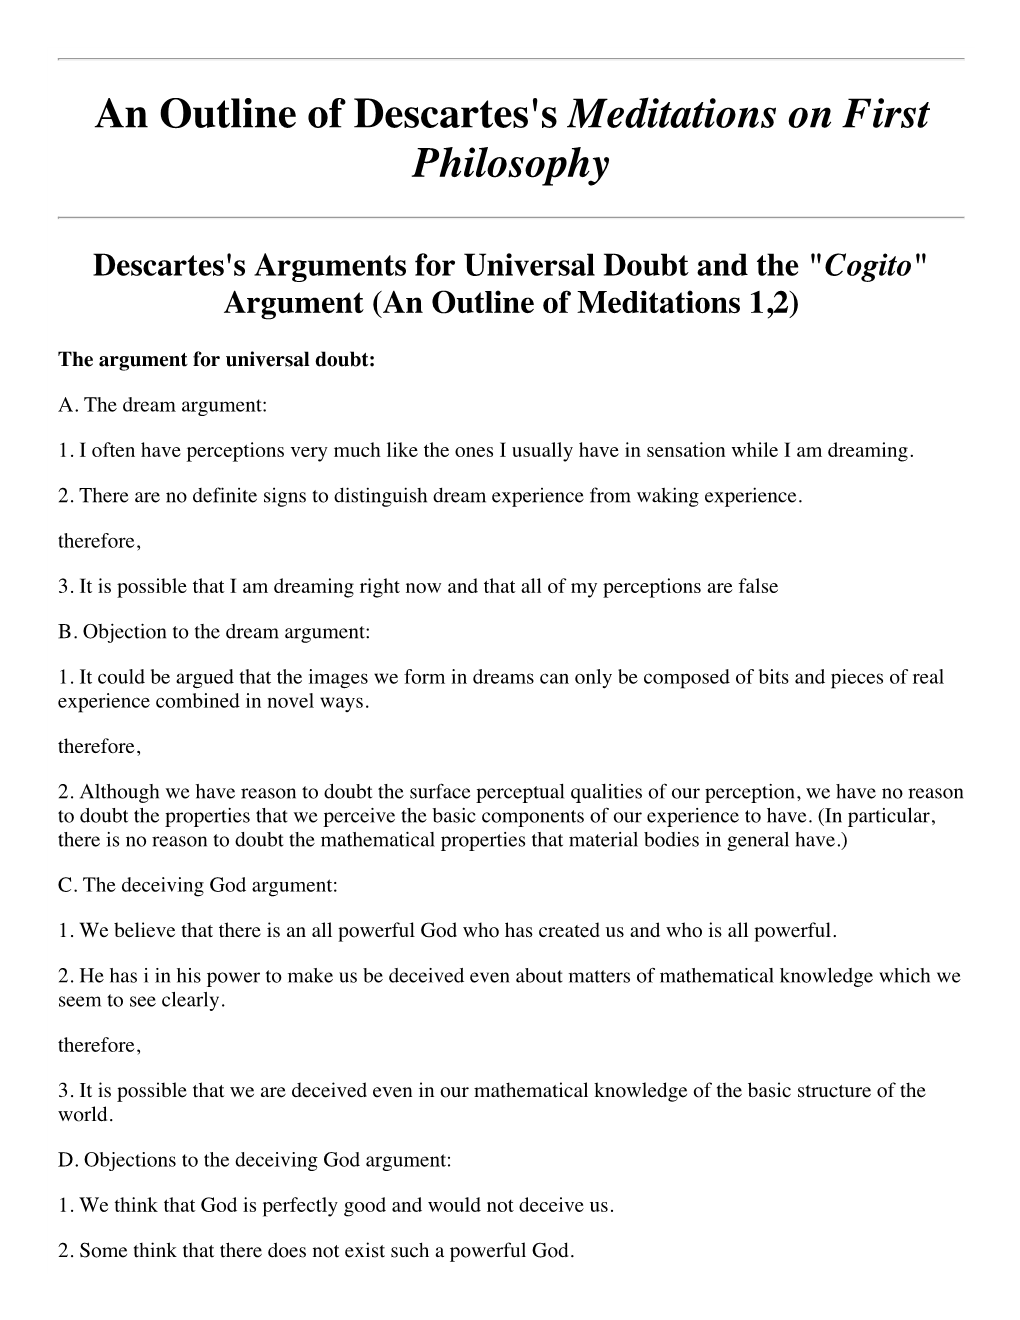 An Outline of Descartes's Meditations on First Philosophy.Pdf